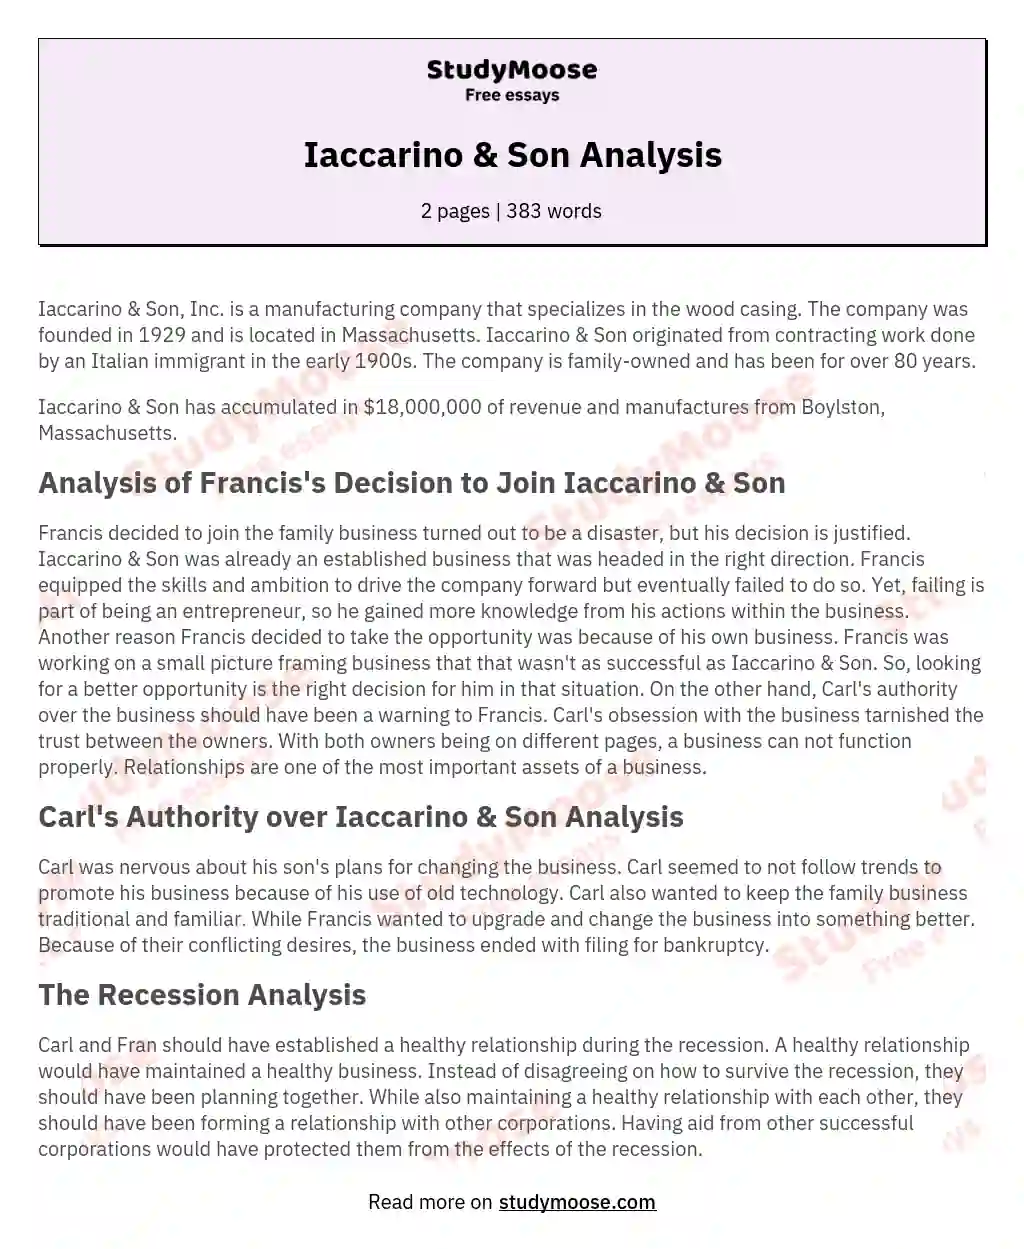 Iaccarino & Son Analysis essay